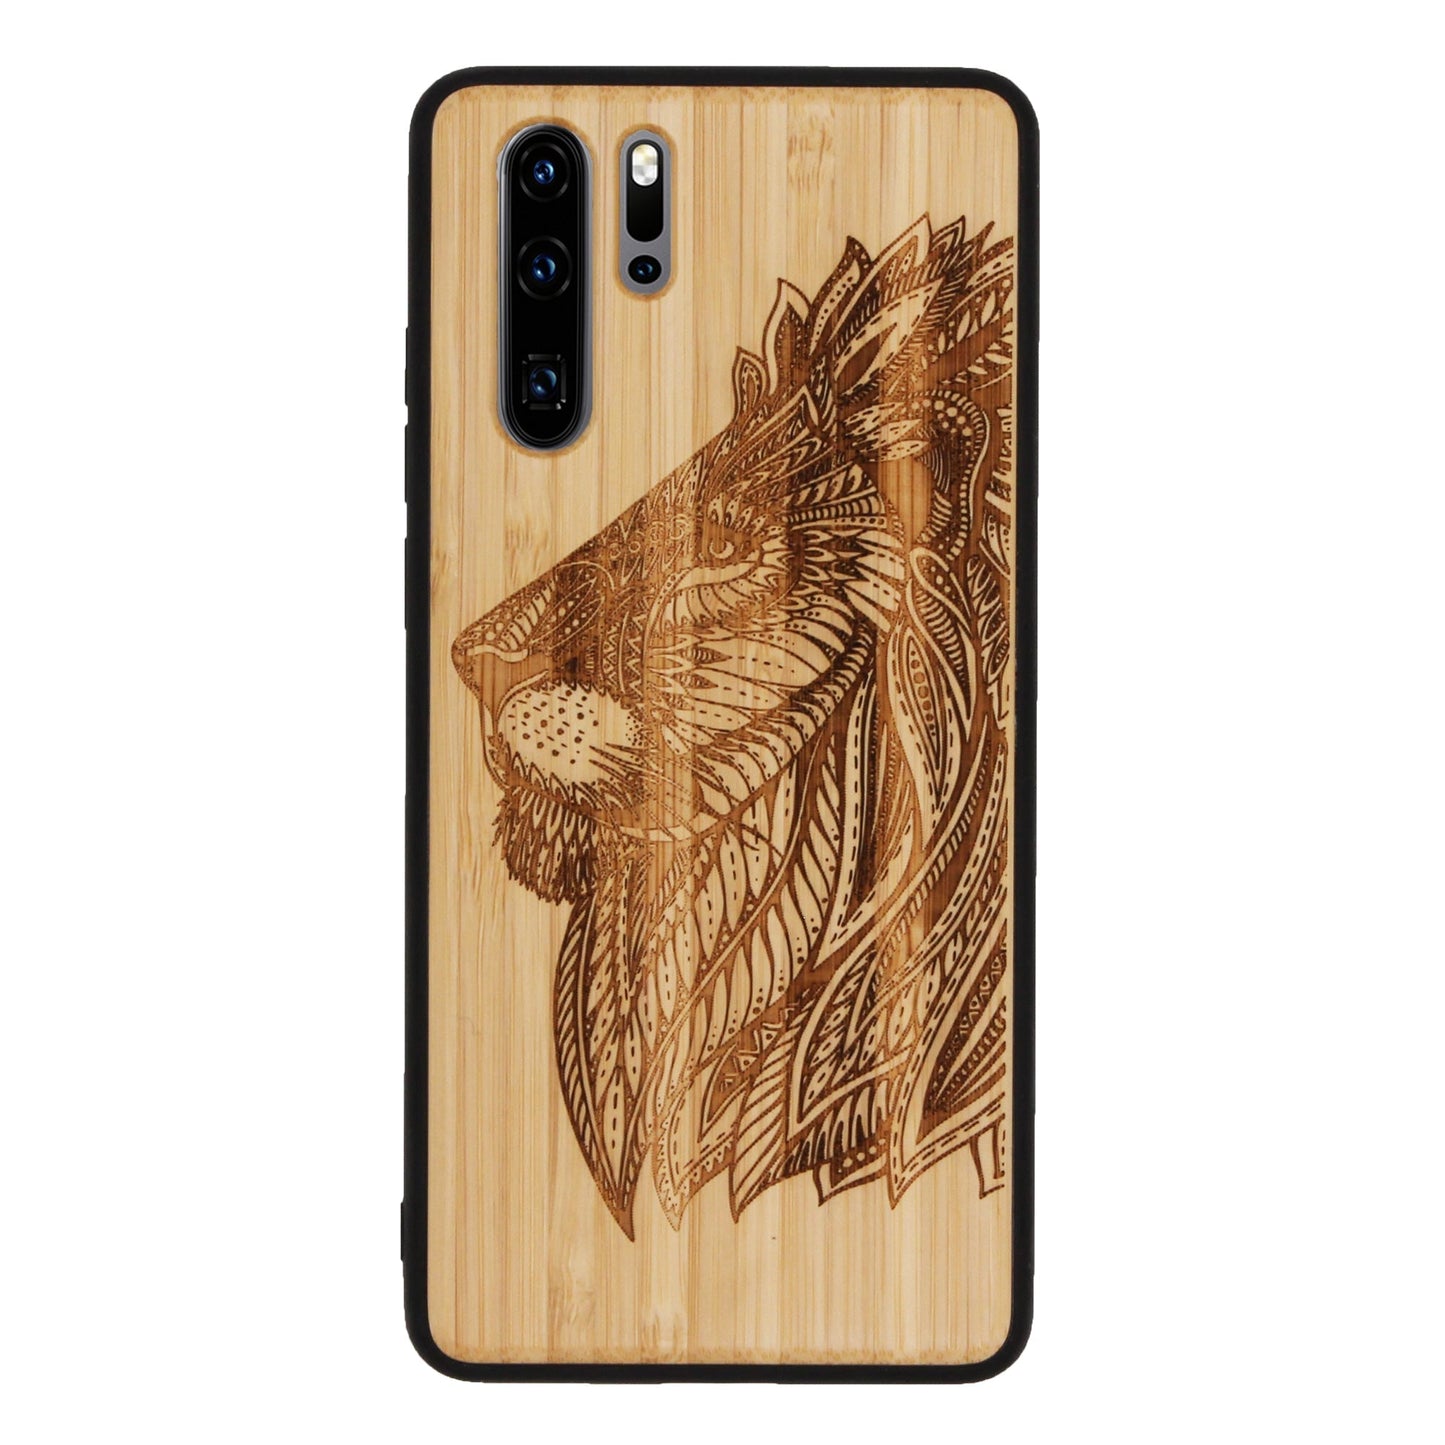 Coque Eden lion en bambou pour Huawei P30 Pro 